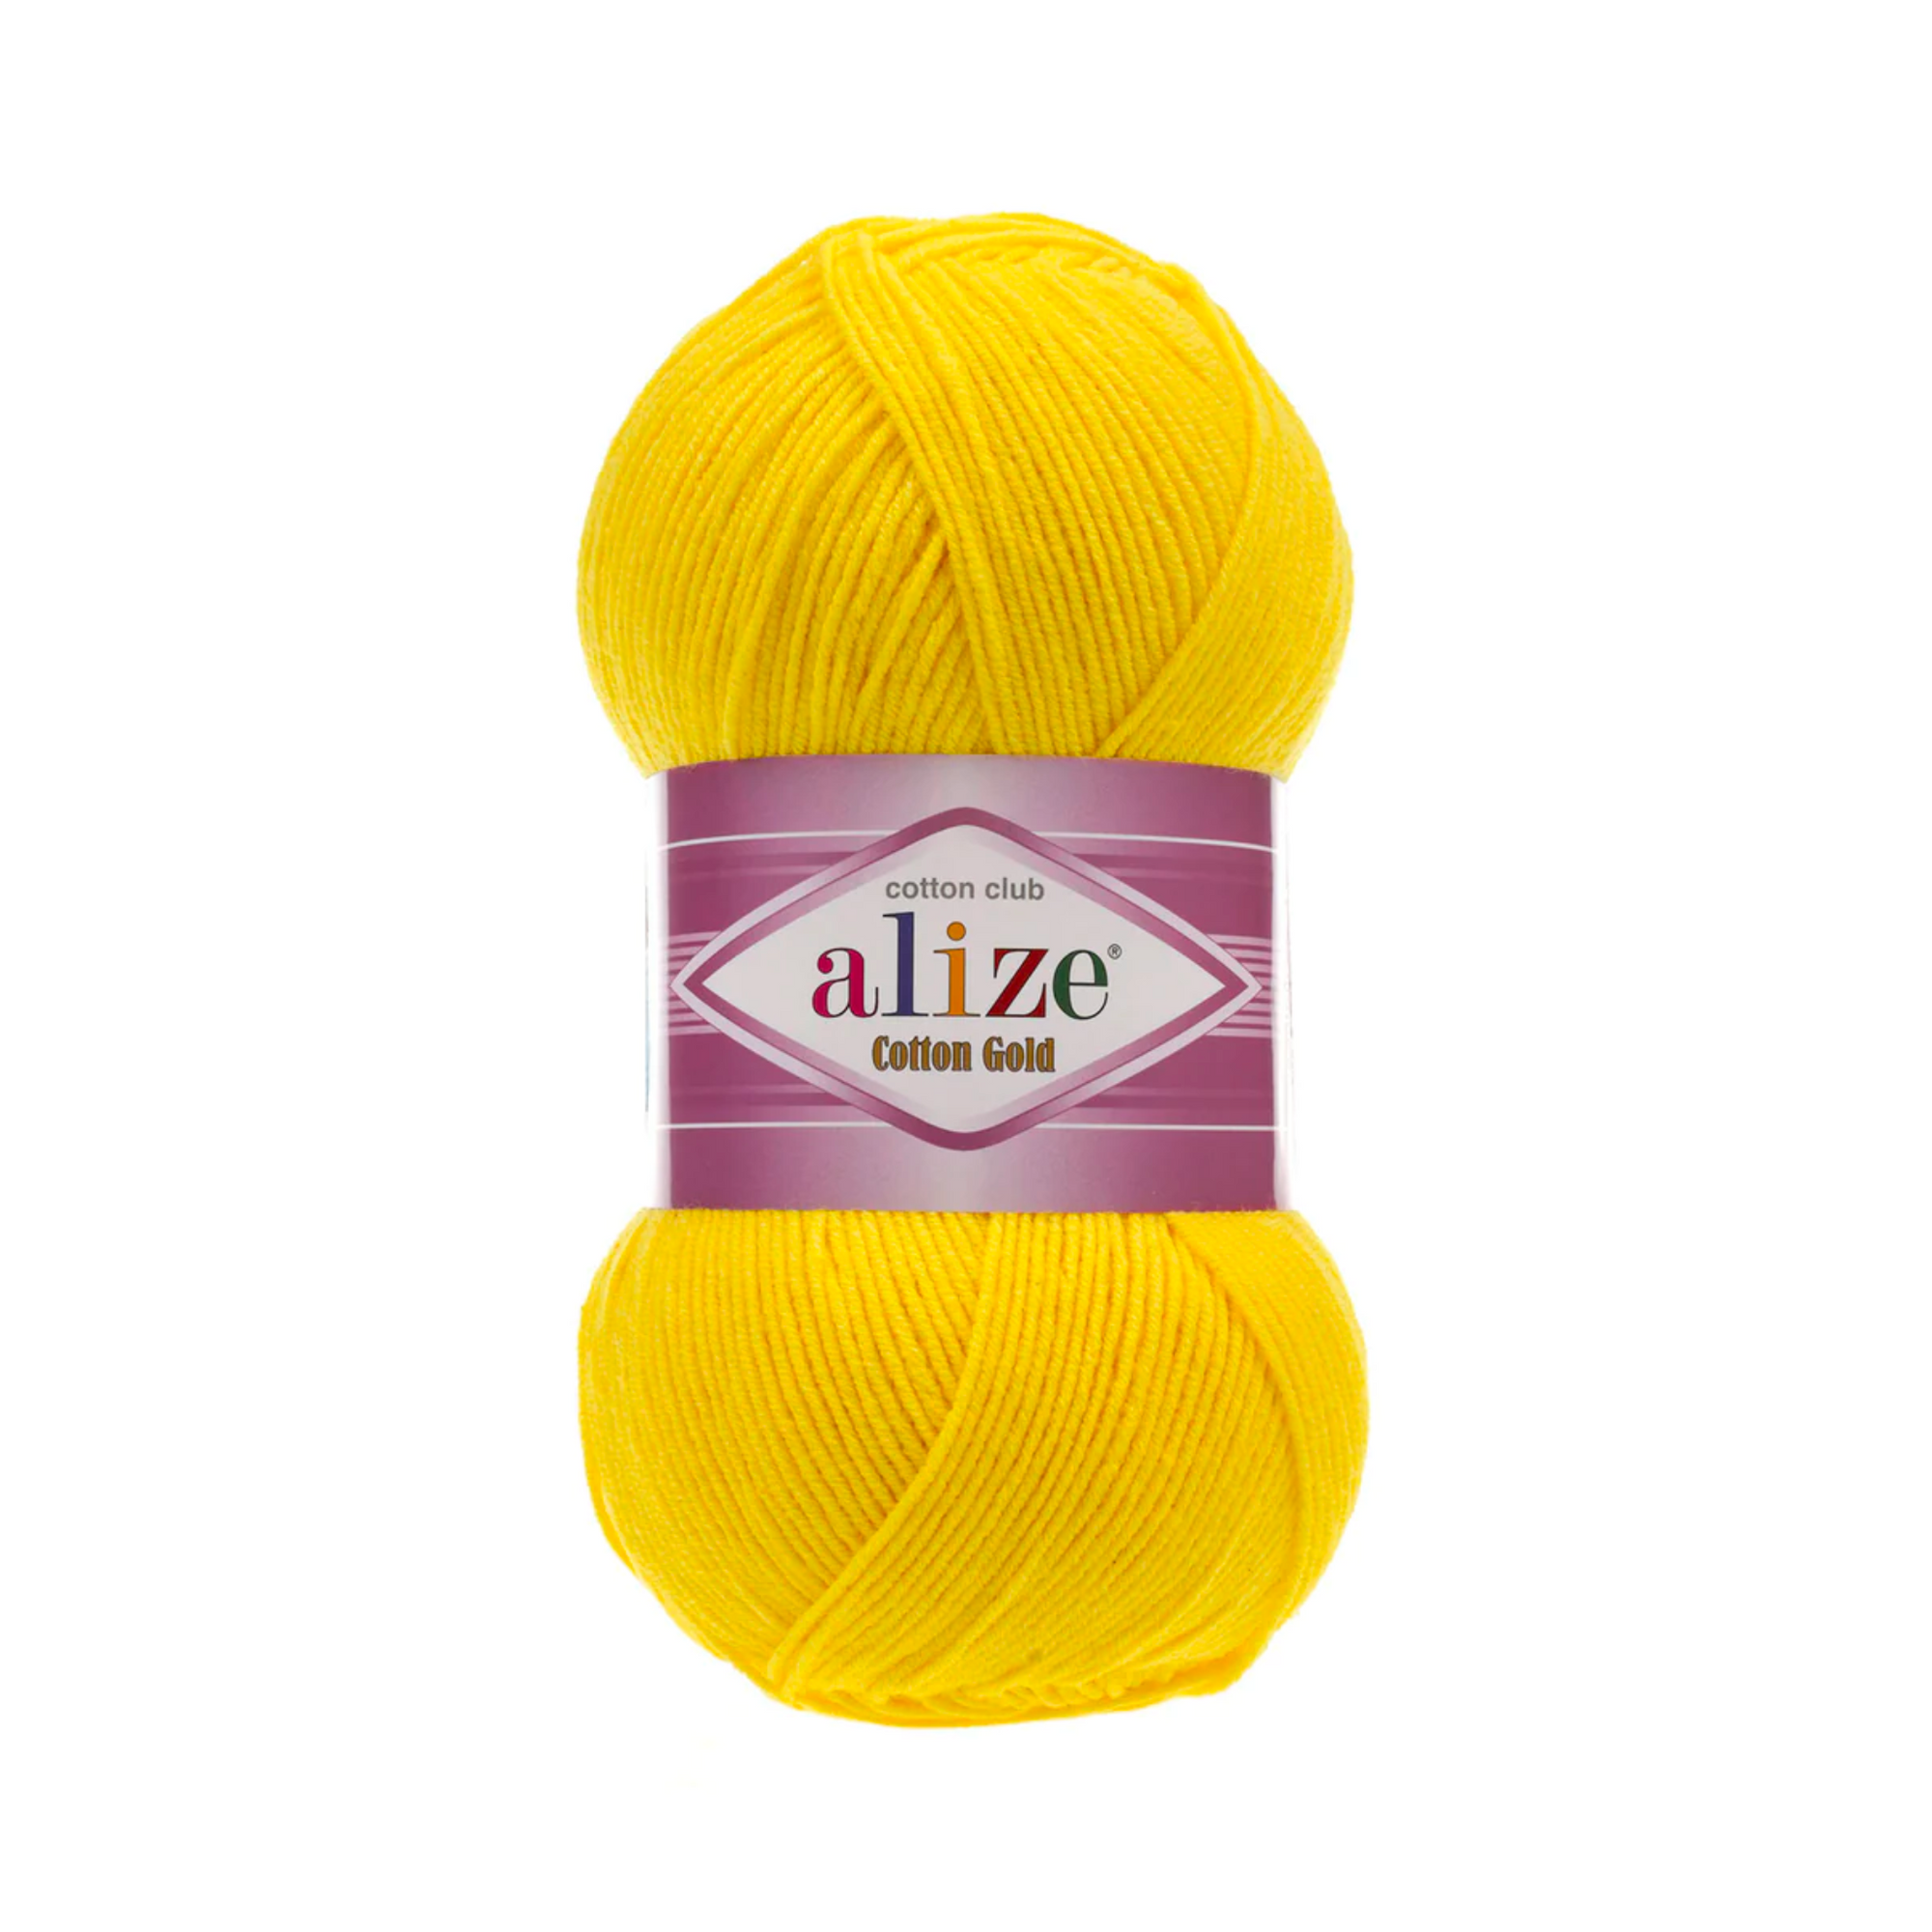 Alize Cotton Gold Knitting Yarn, Emerald Green - 610